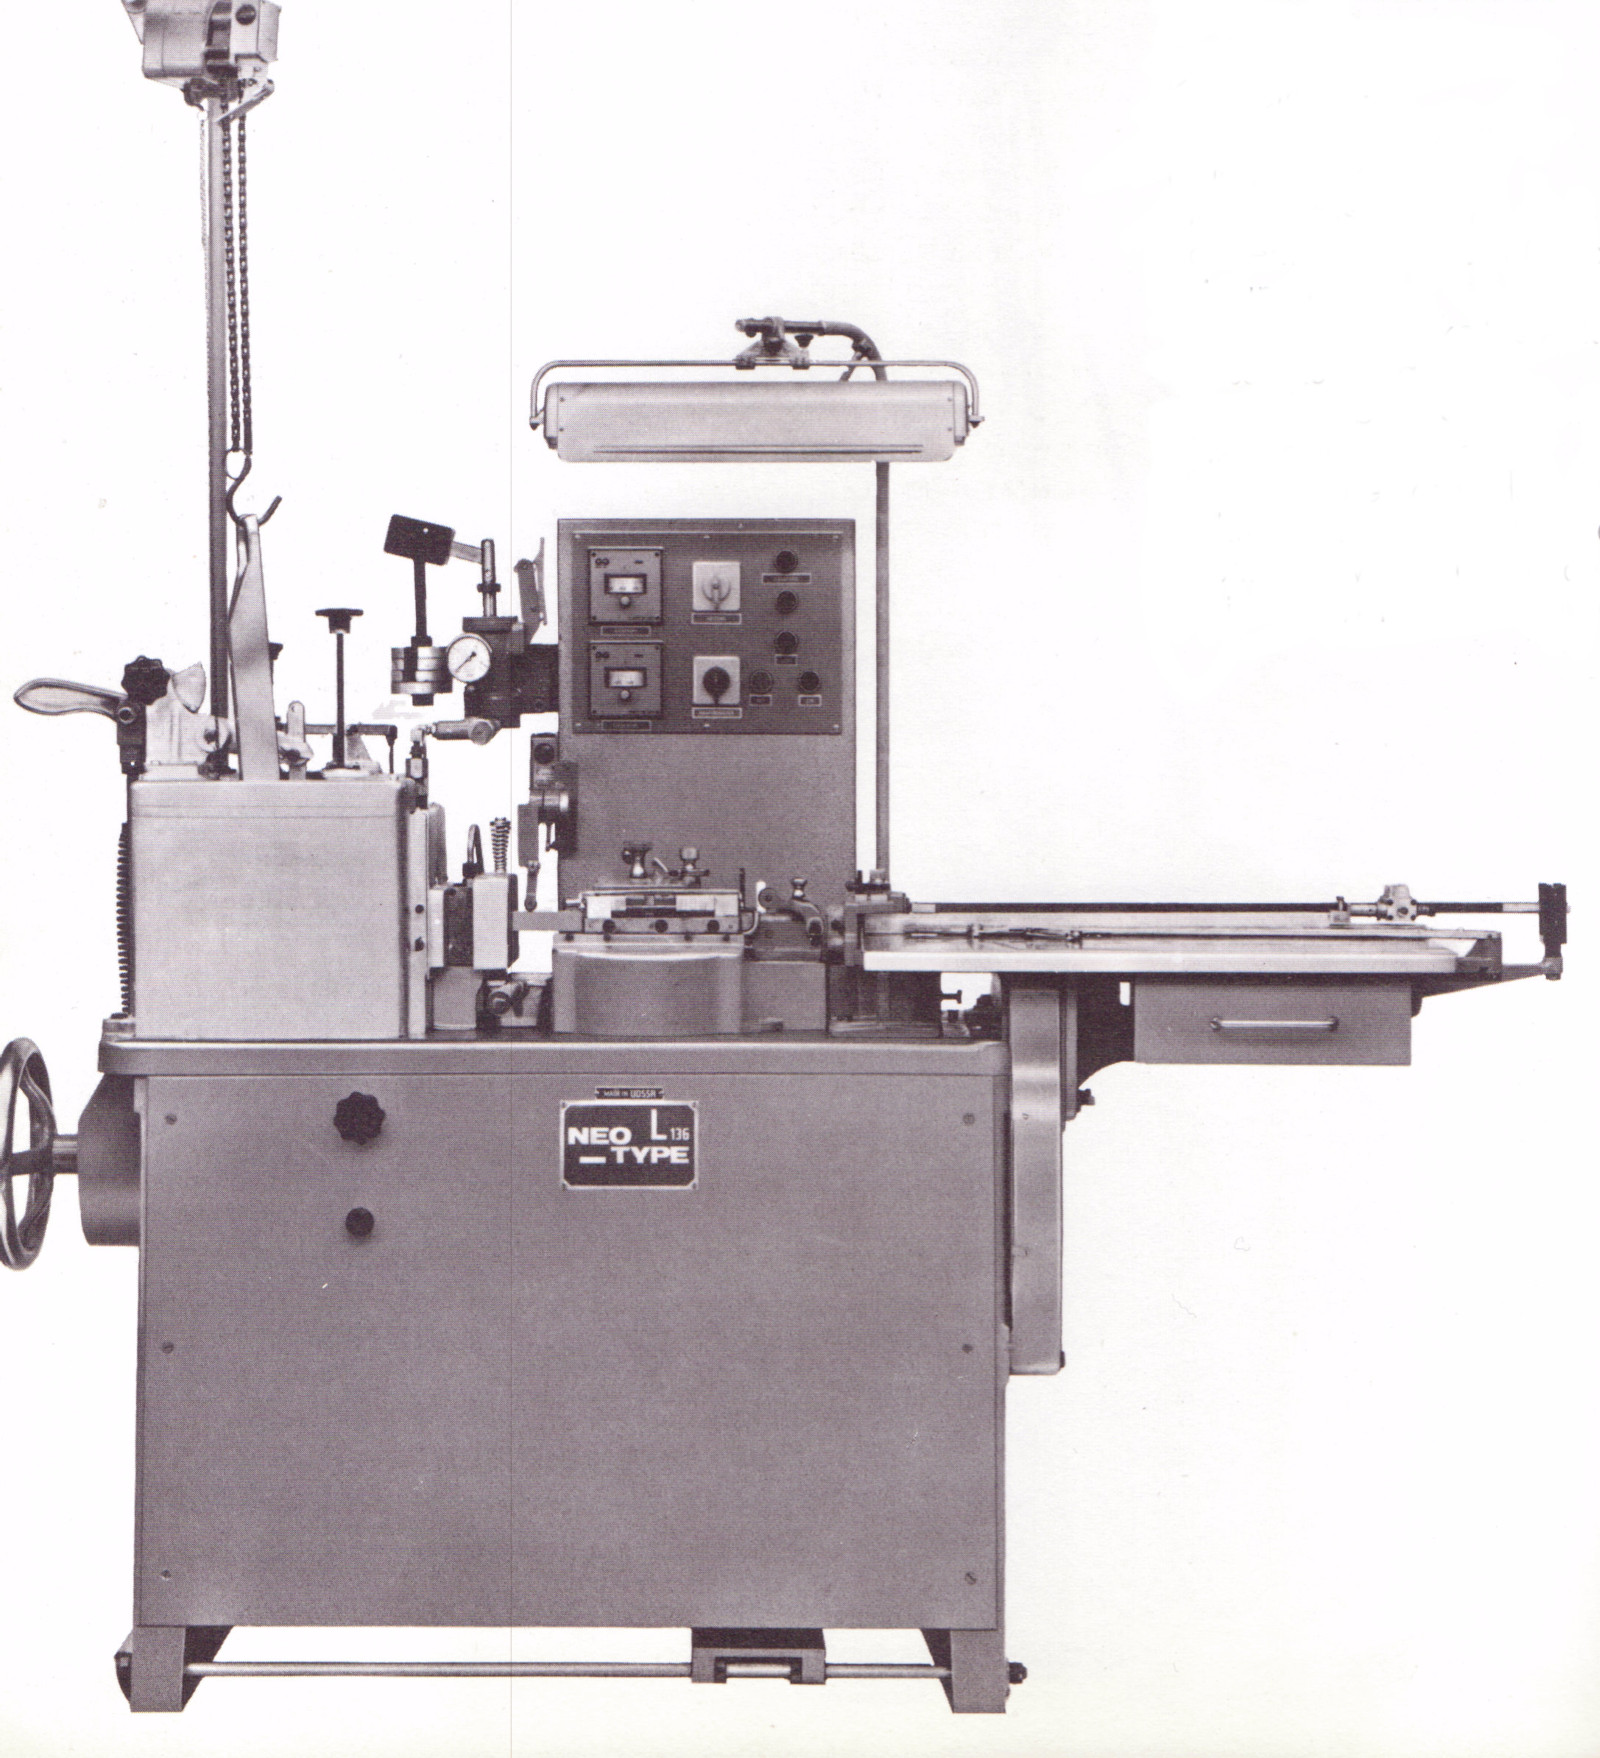 Neotype L32 Russian strip casting machine